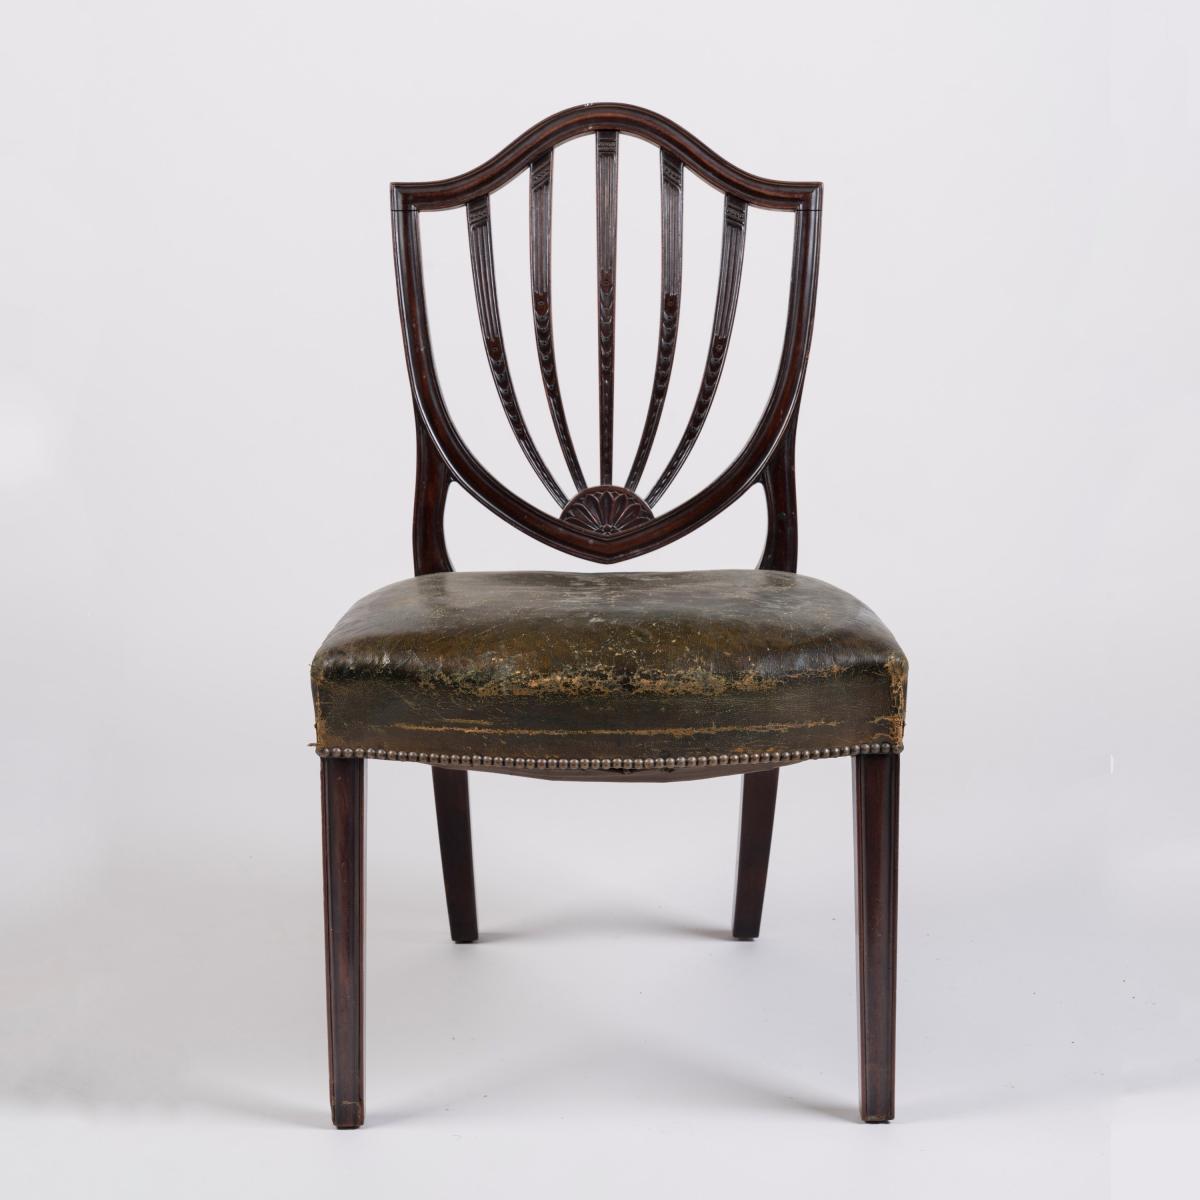 Twelve George III Style Dining Chairs